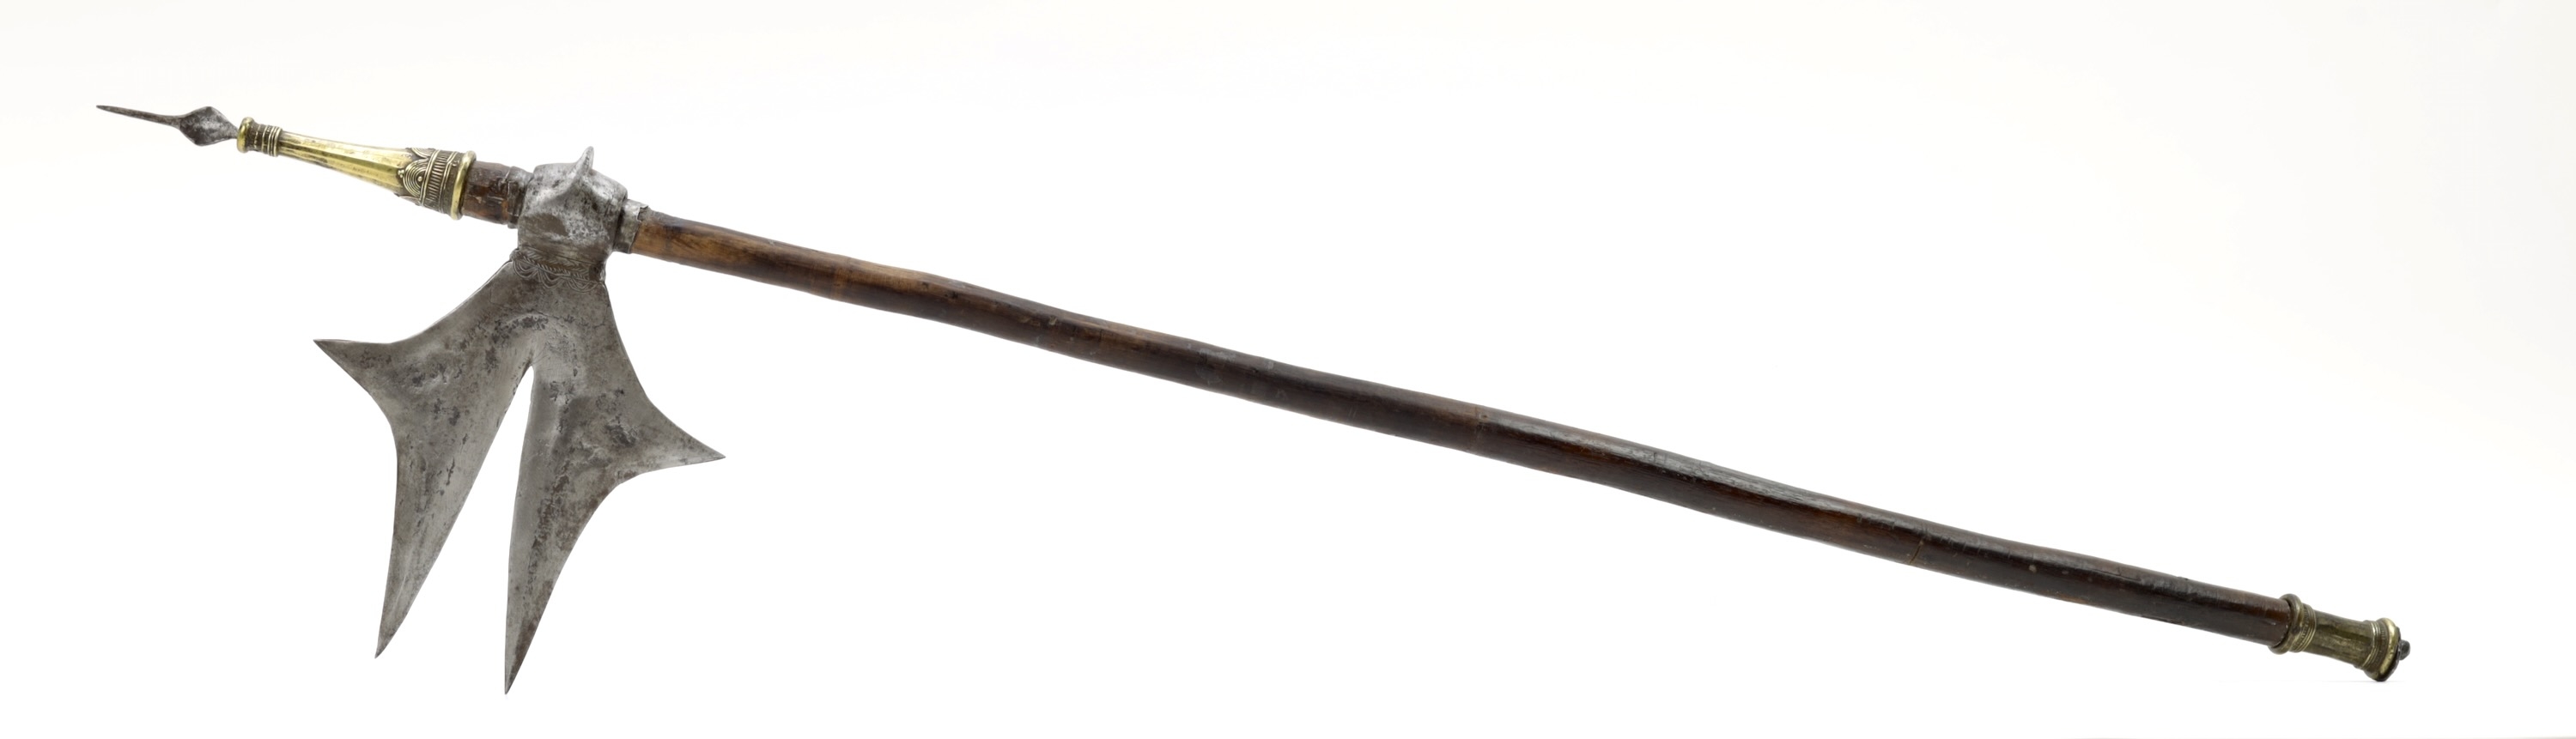 Rare bifurcated Khond bullova axe from Chota Nagpur